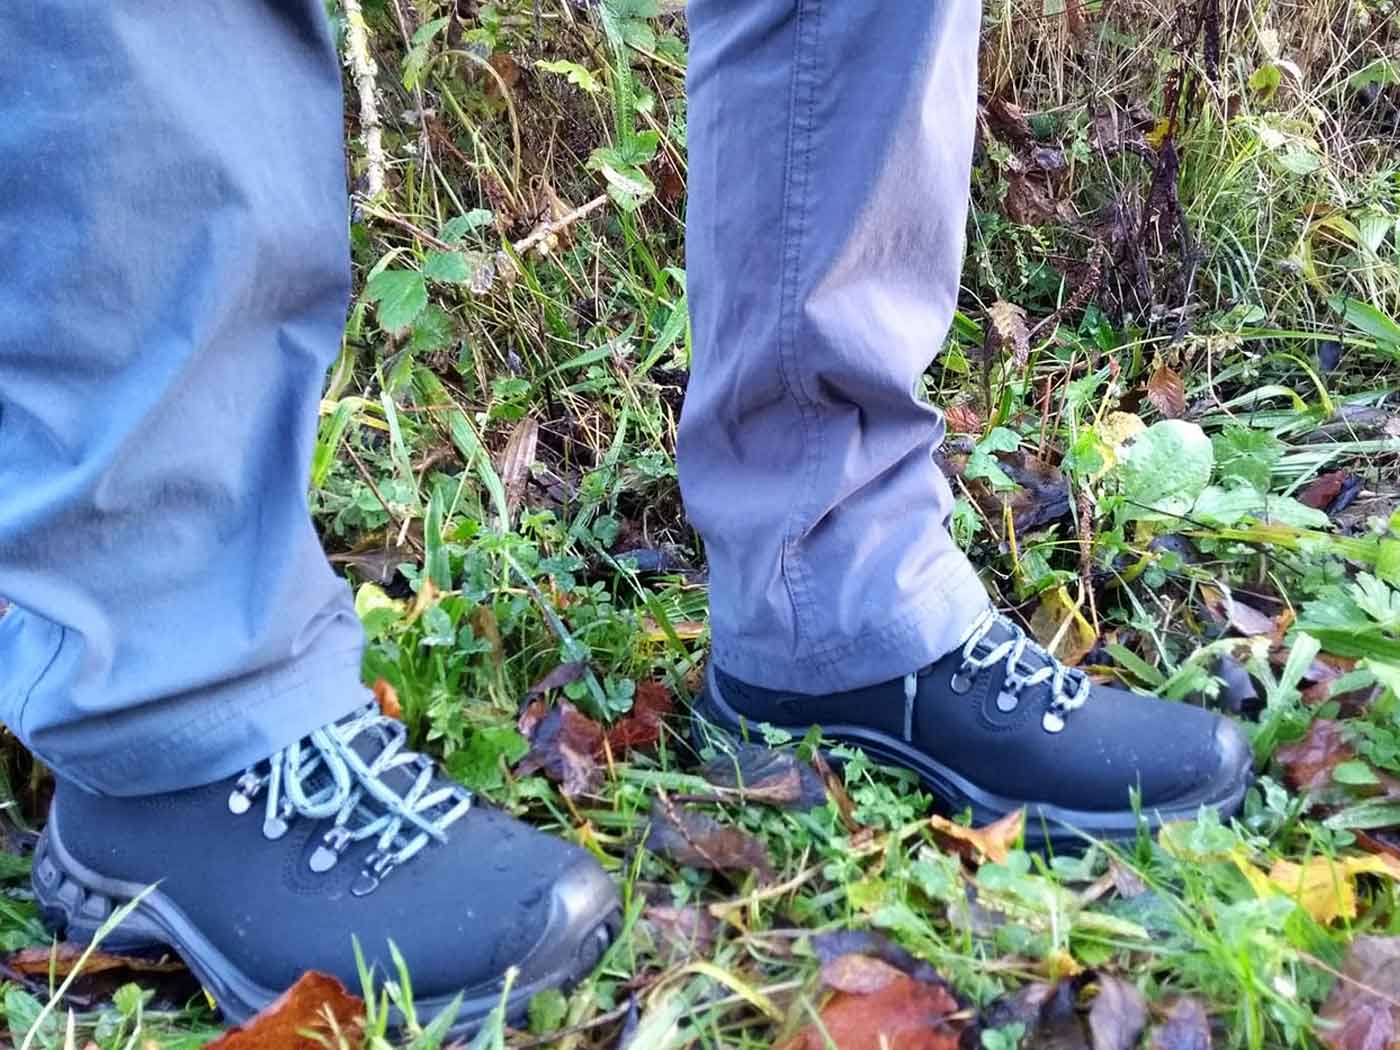 wills vegan walking boots